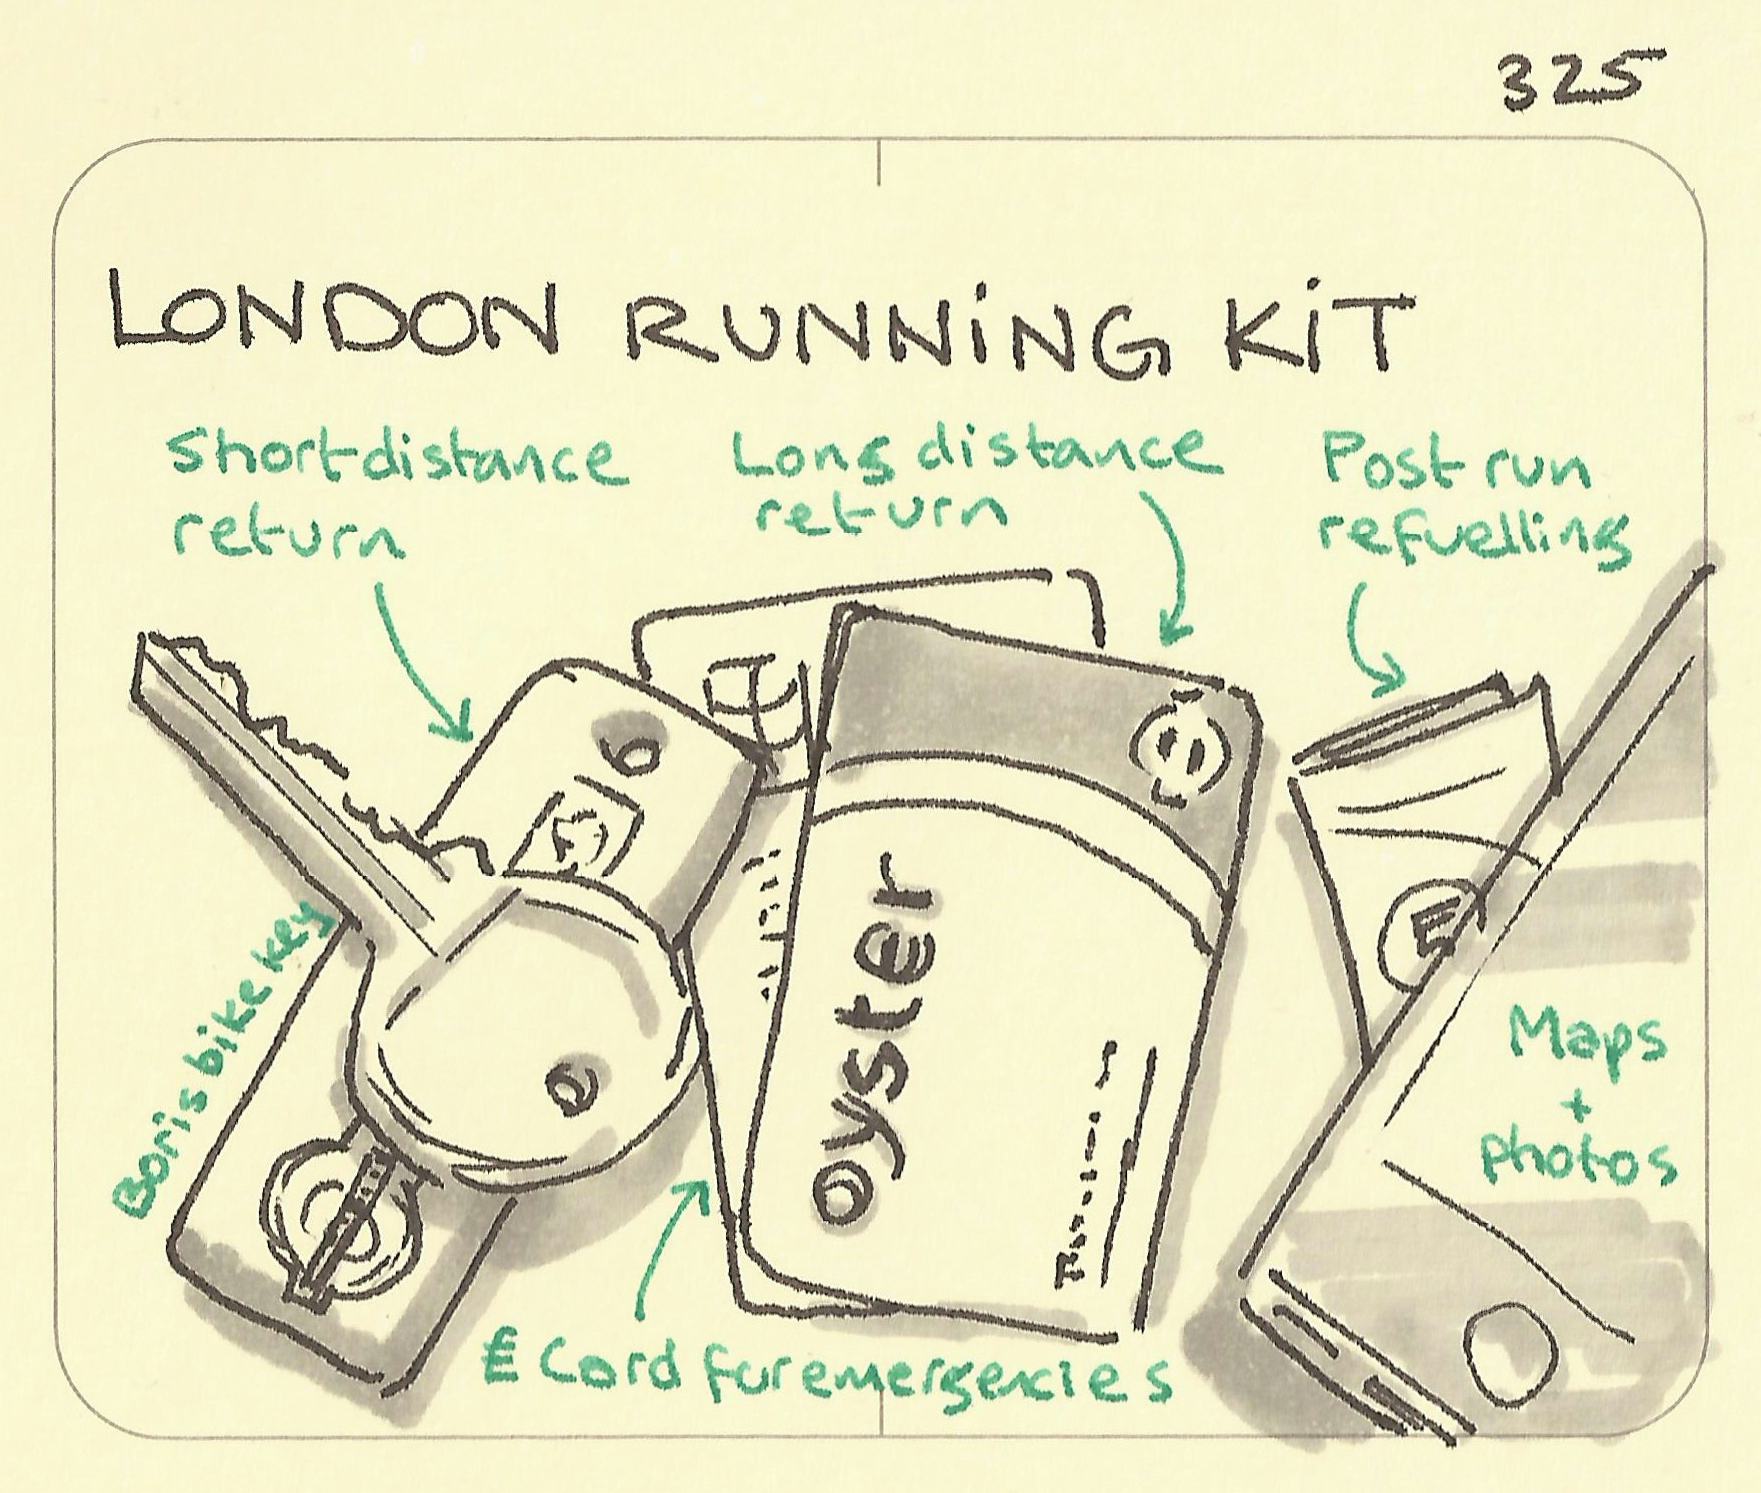 London running kit - Sketchplanations